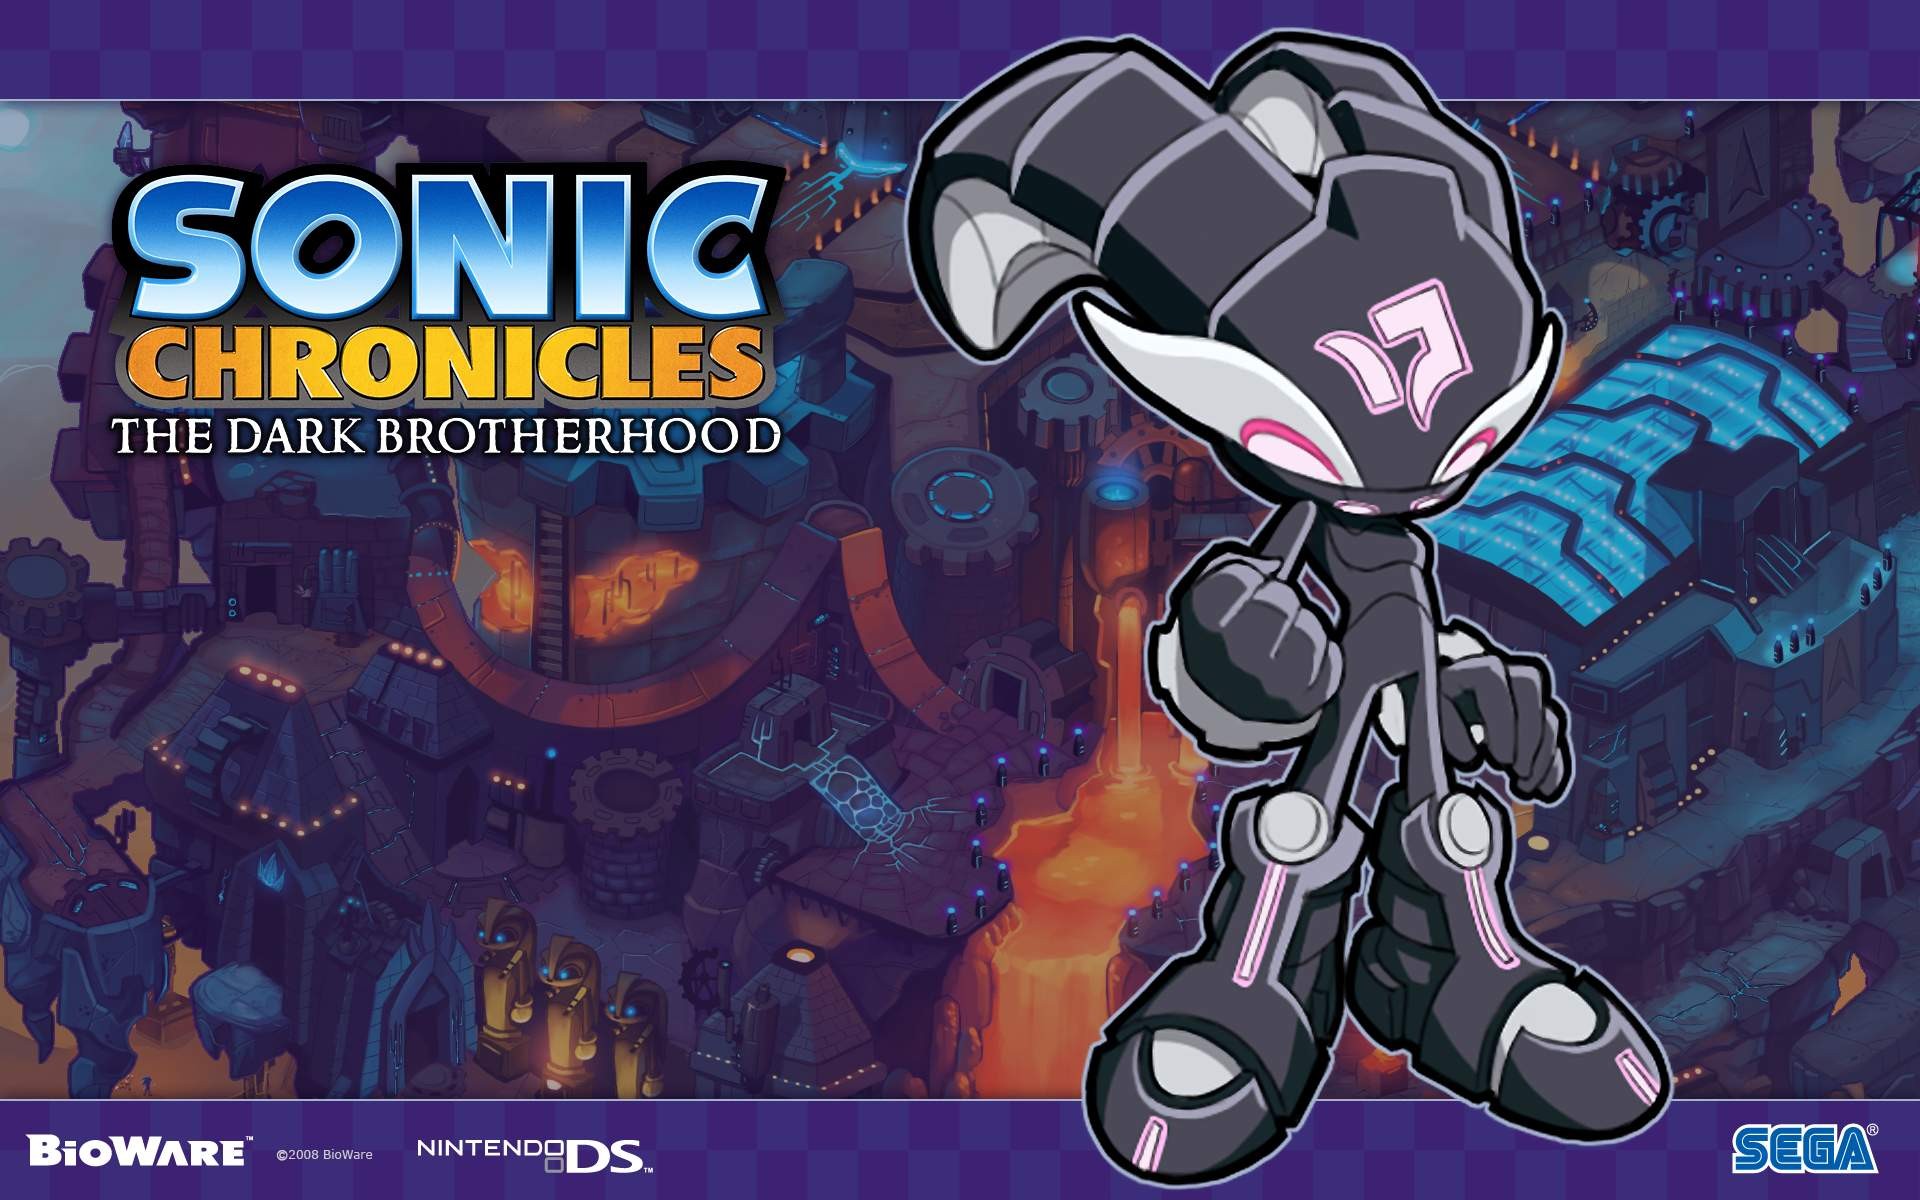 General 1920x1200 2008 (Year) video games Sonic the Hedgehog Sonic Chronicles: The Dark Brotherhood Bioware Nintendo DS Sega